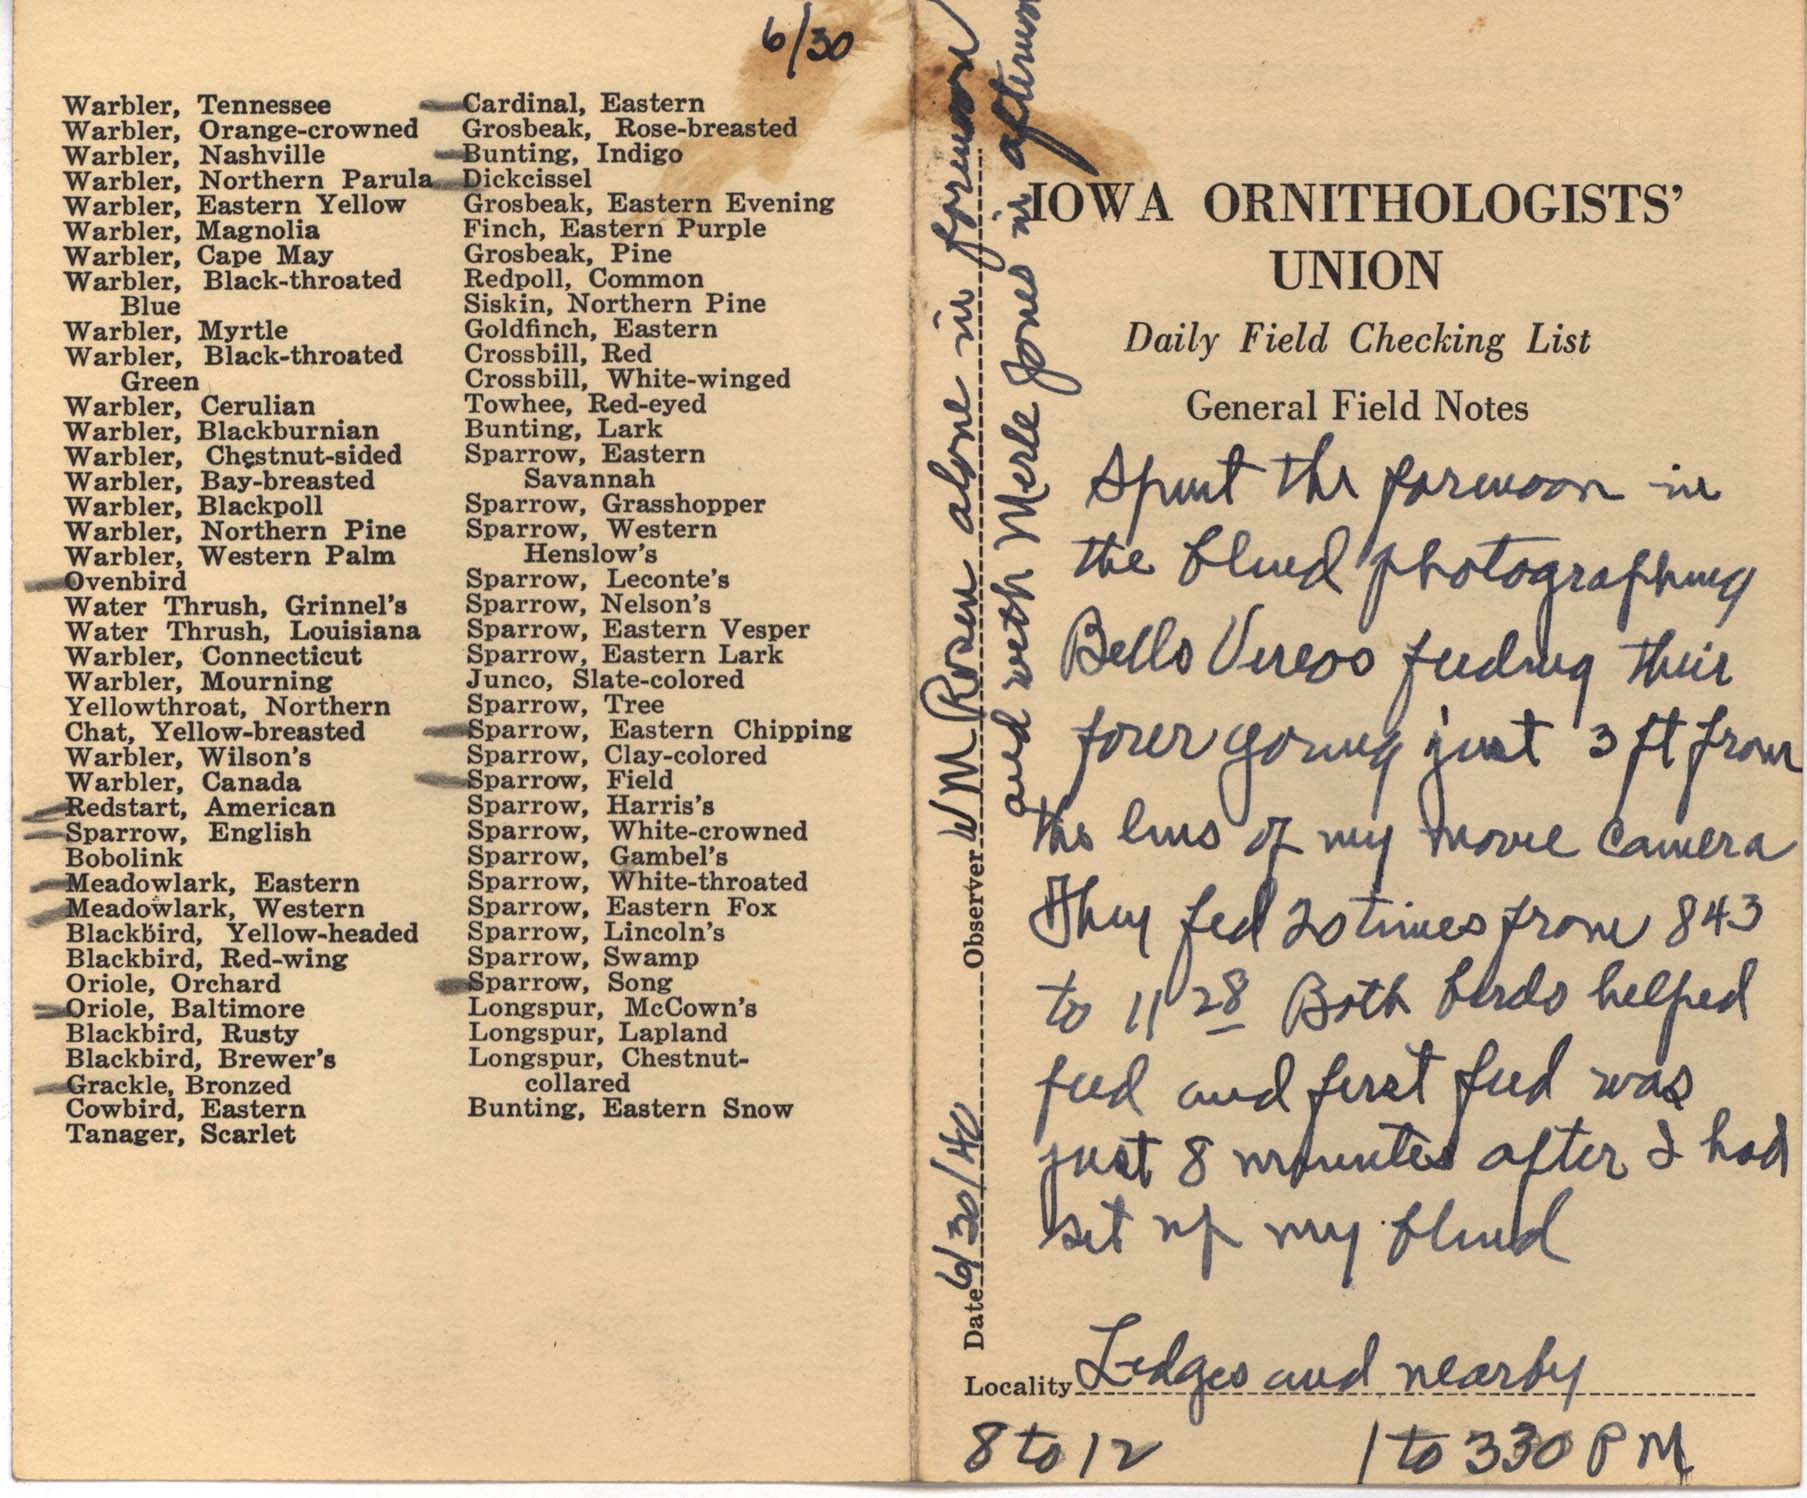 Daily field checking list by Walter Rosene, June 30, 1940